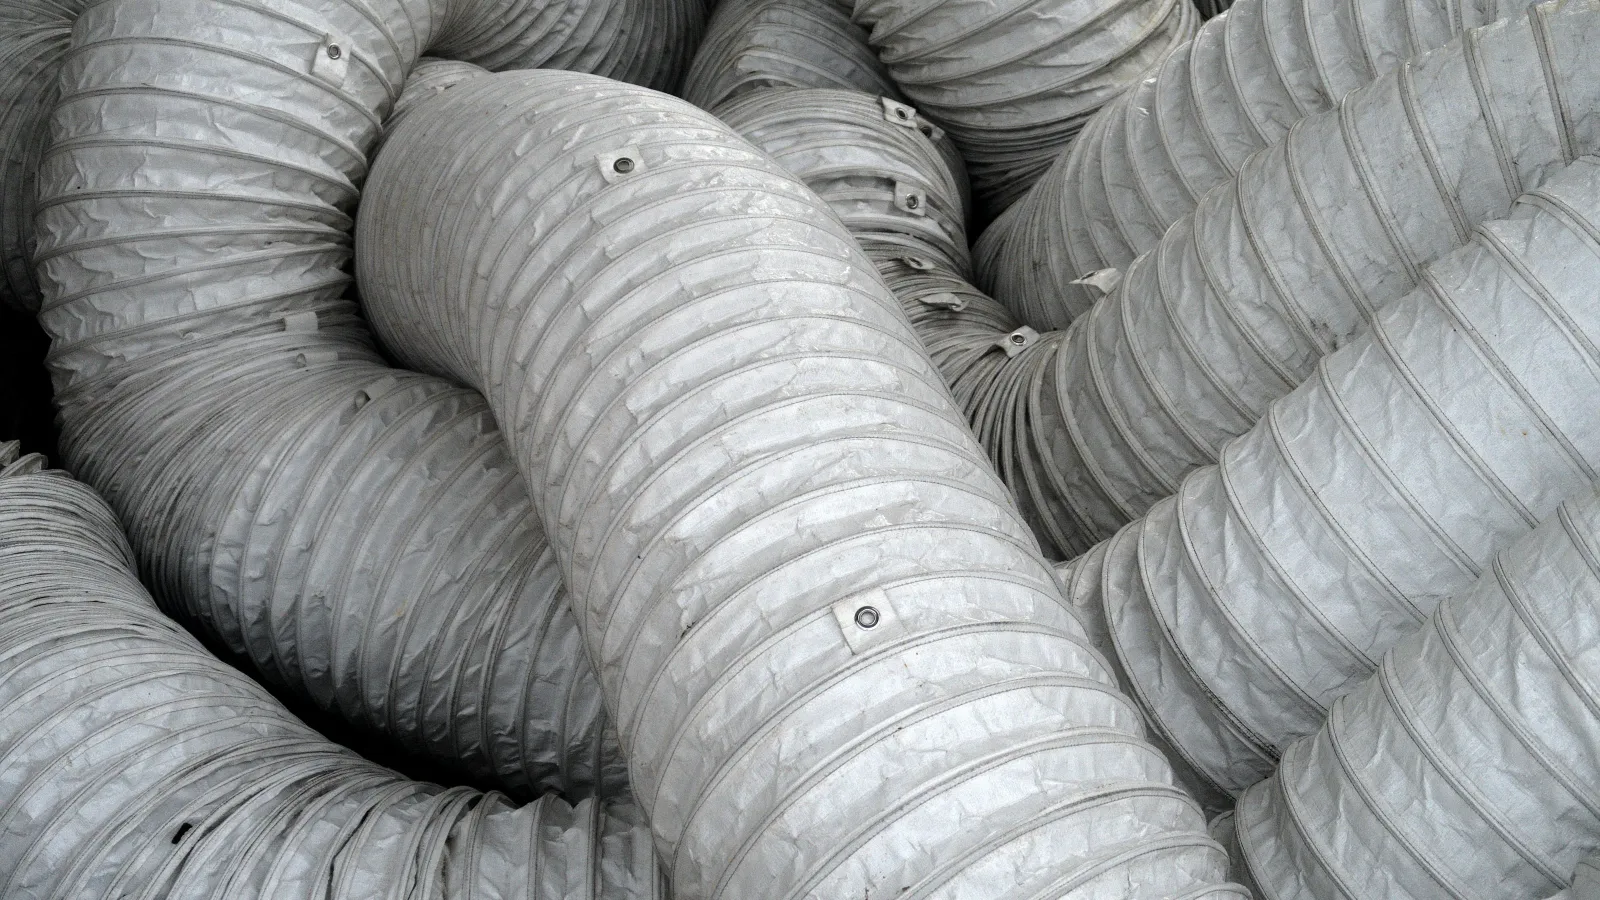 a close up of a grey fabric